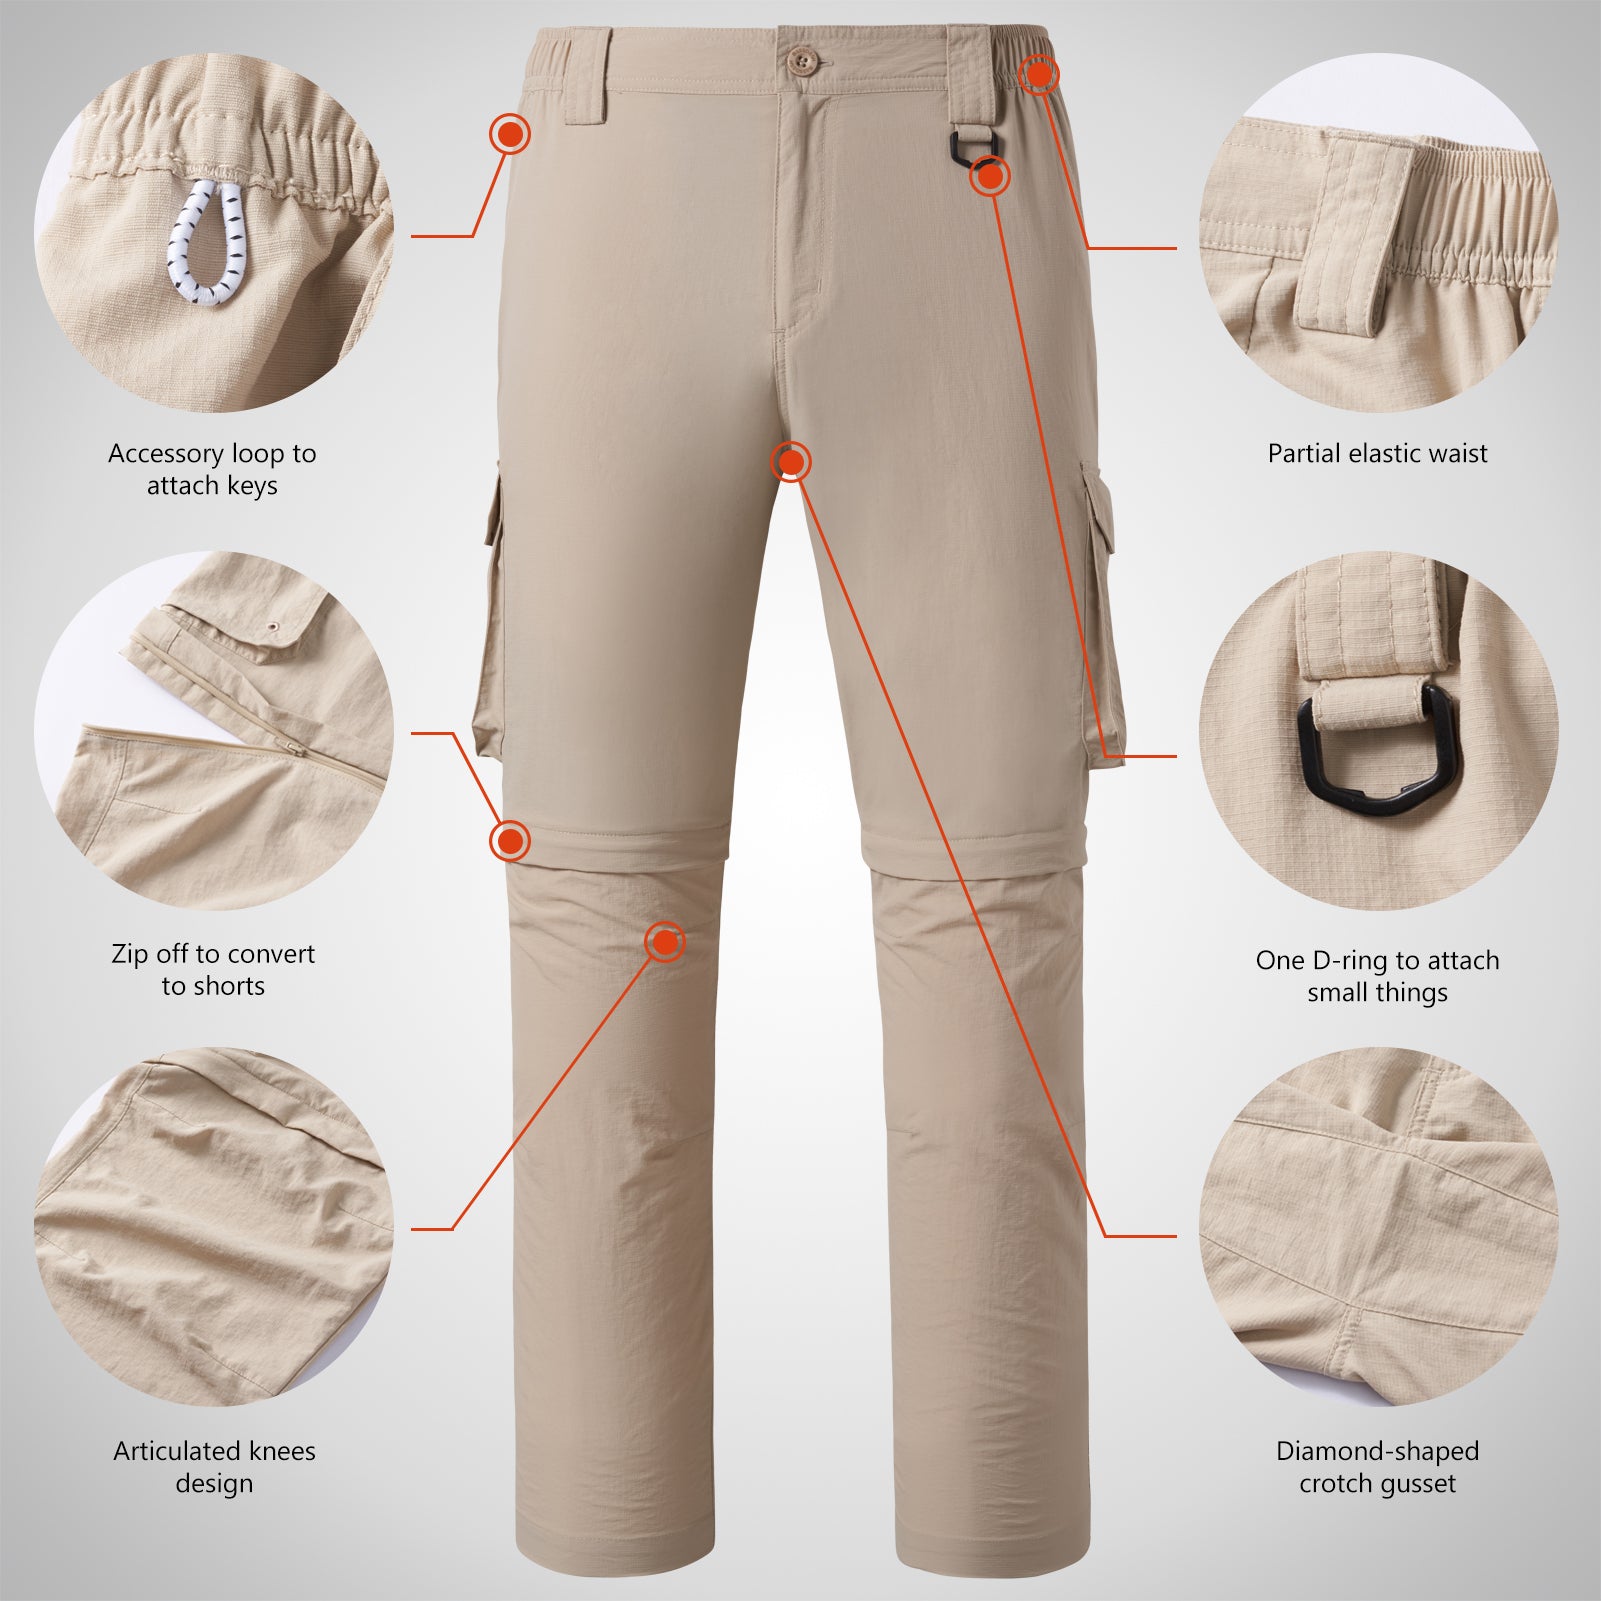 Men’s UPF 50+ Quick Dry Convertible Pants FP02M, Pond Green / 36W×30L